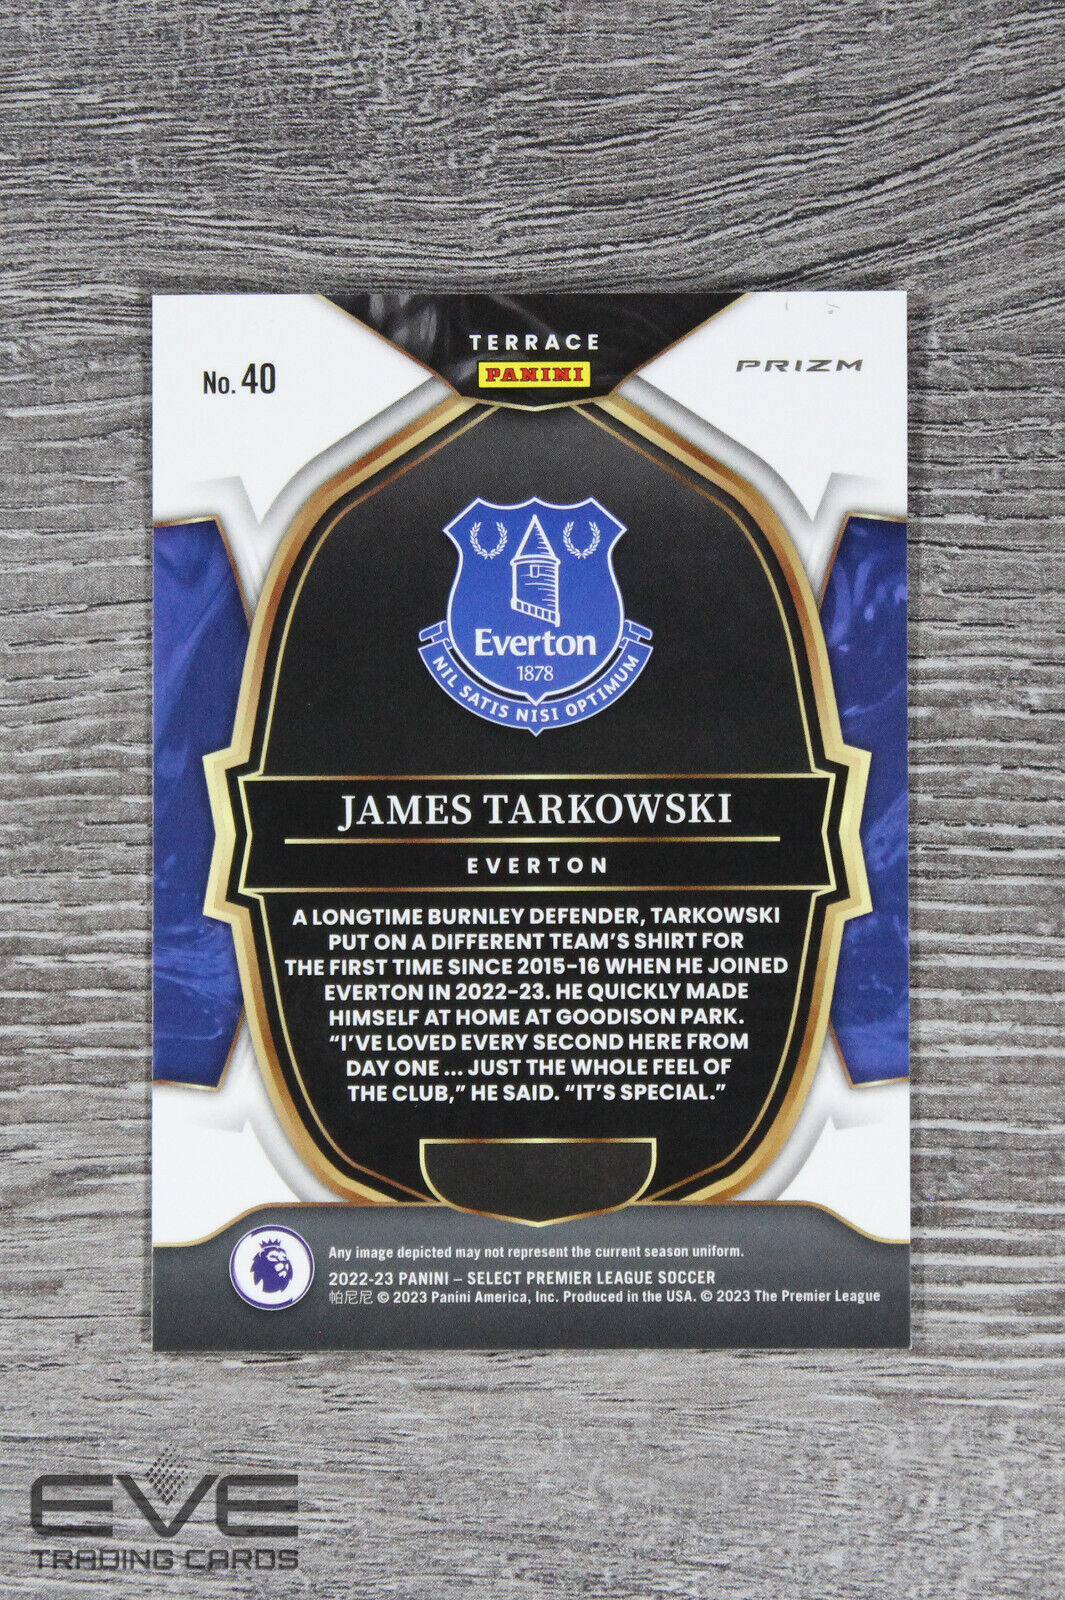 2022-23 Panini Select EPL Soccer Card #40 James Tarkowski Terrace Red Prizm NM/M